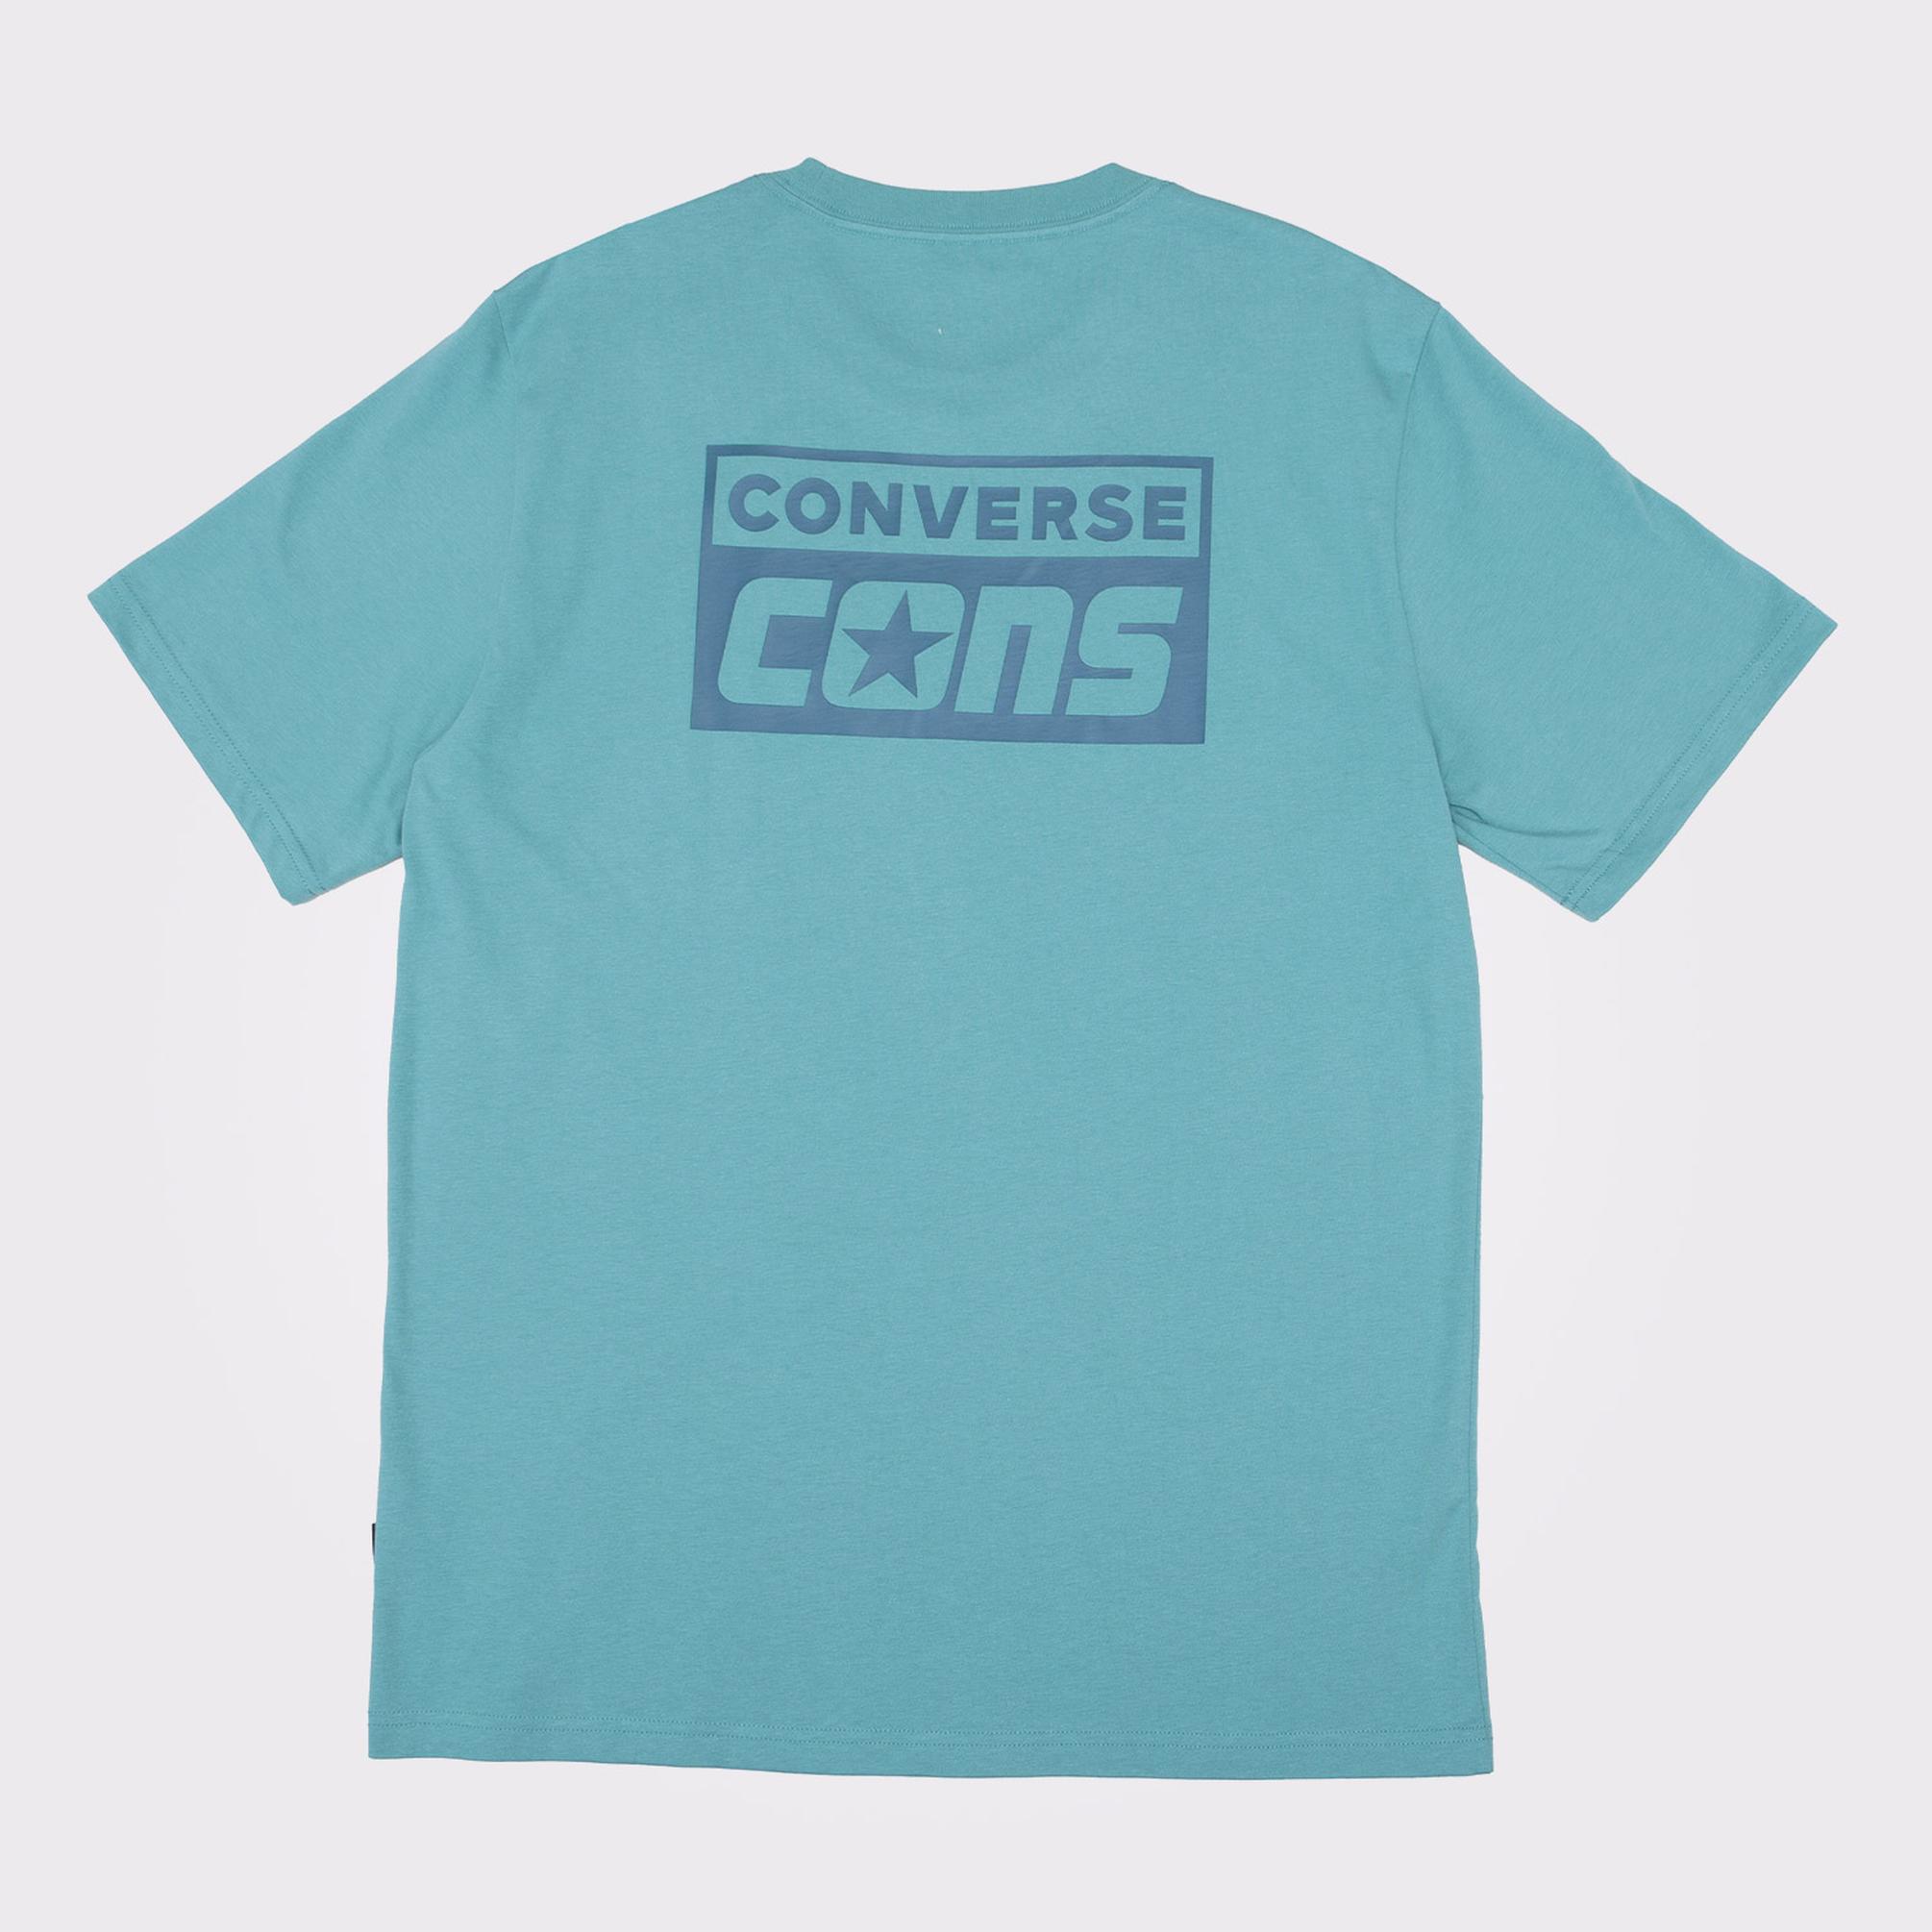  Converse Cons Graphic  Erkek Yeşil T-Shirt